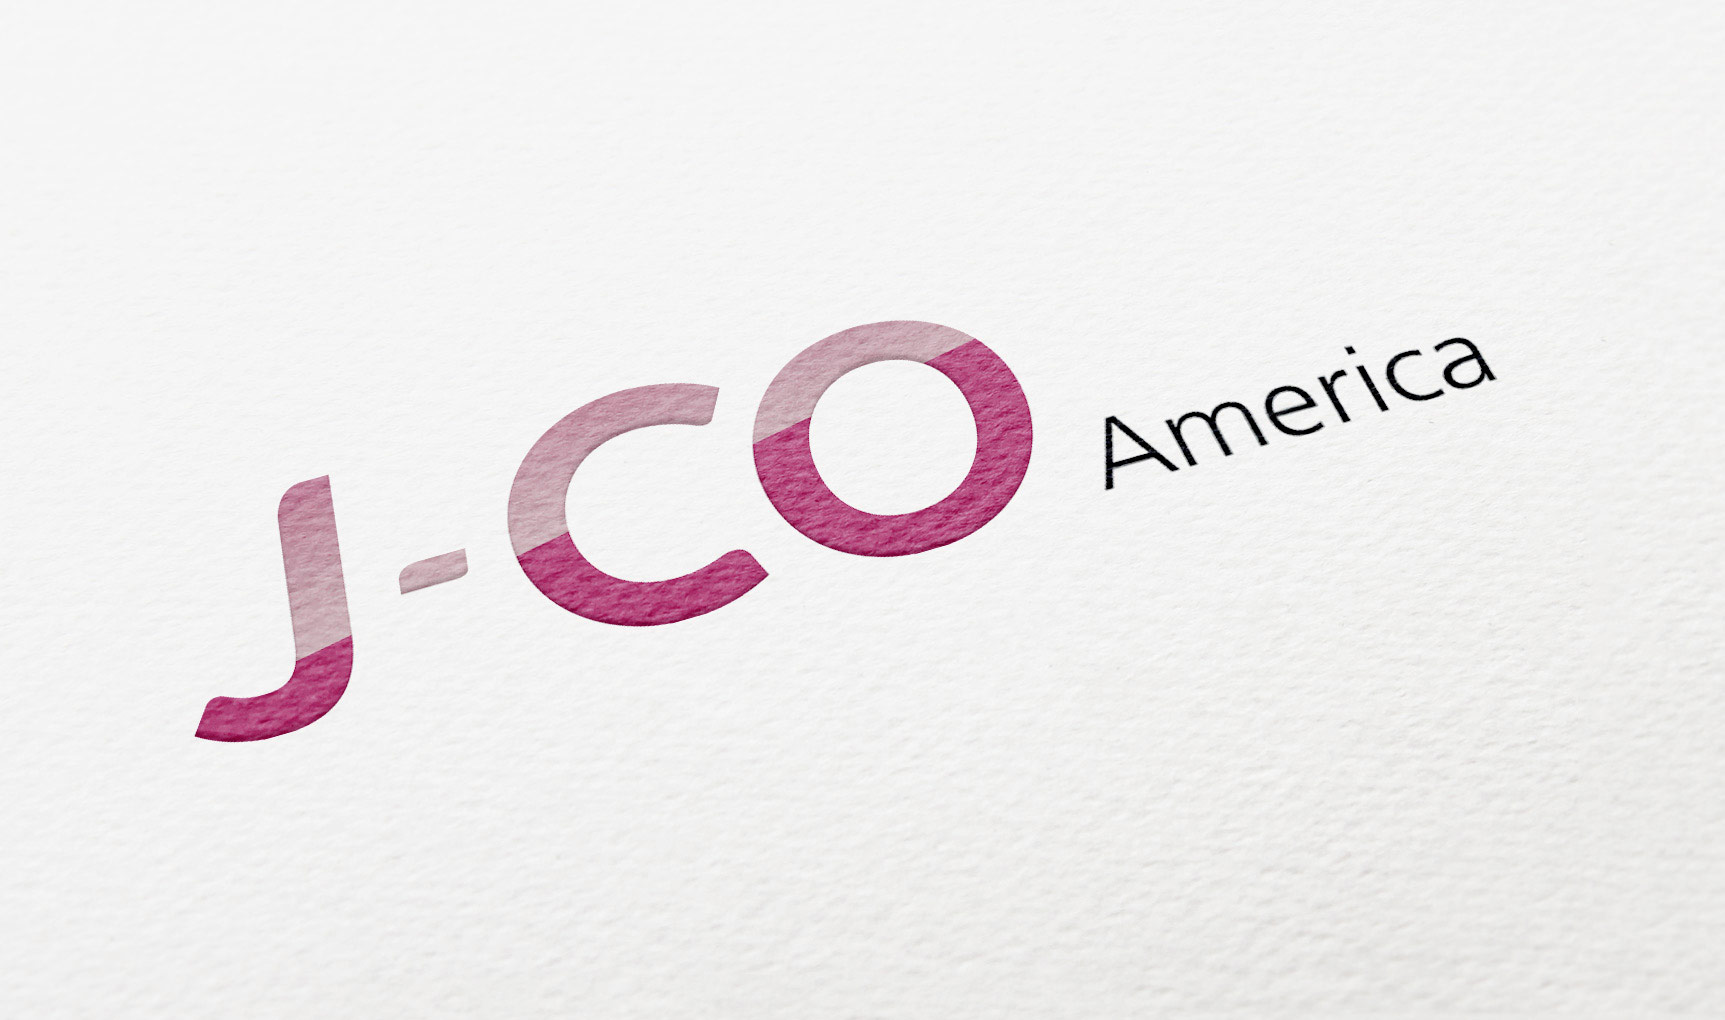 J.co America corporate image